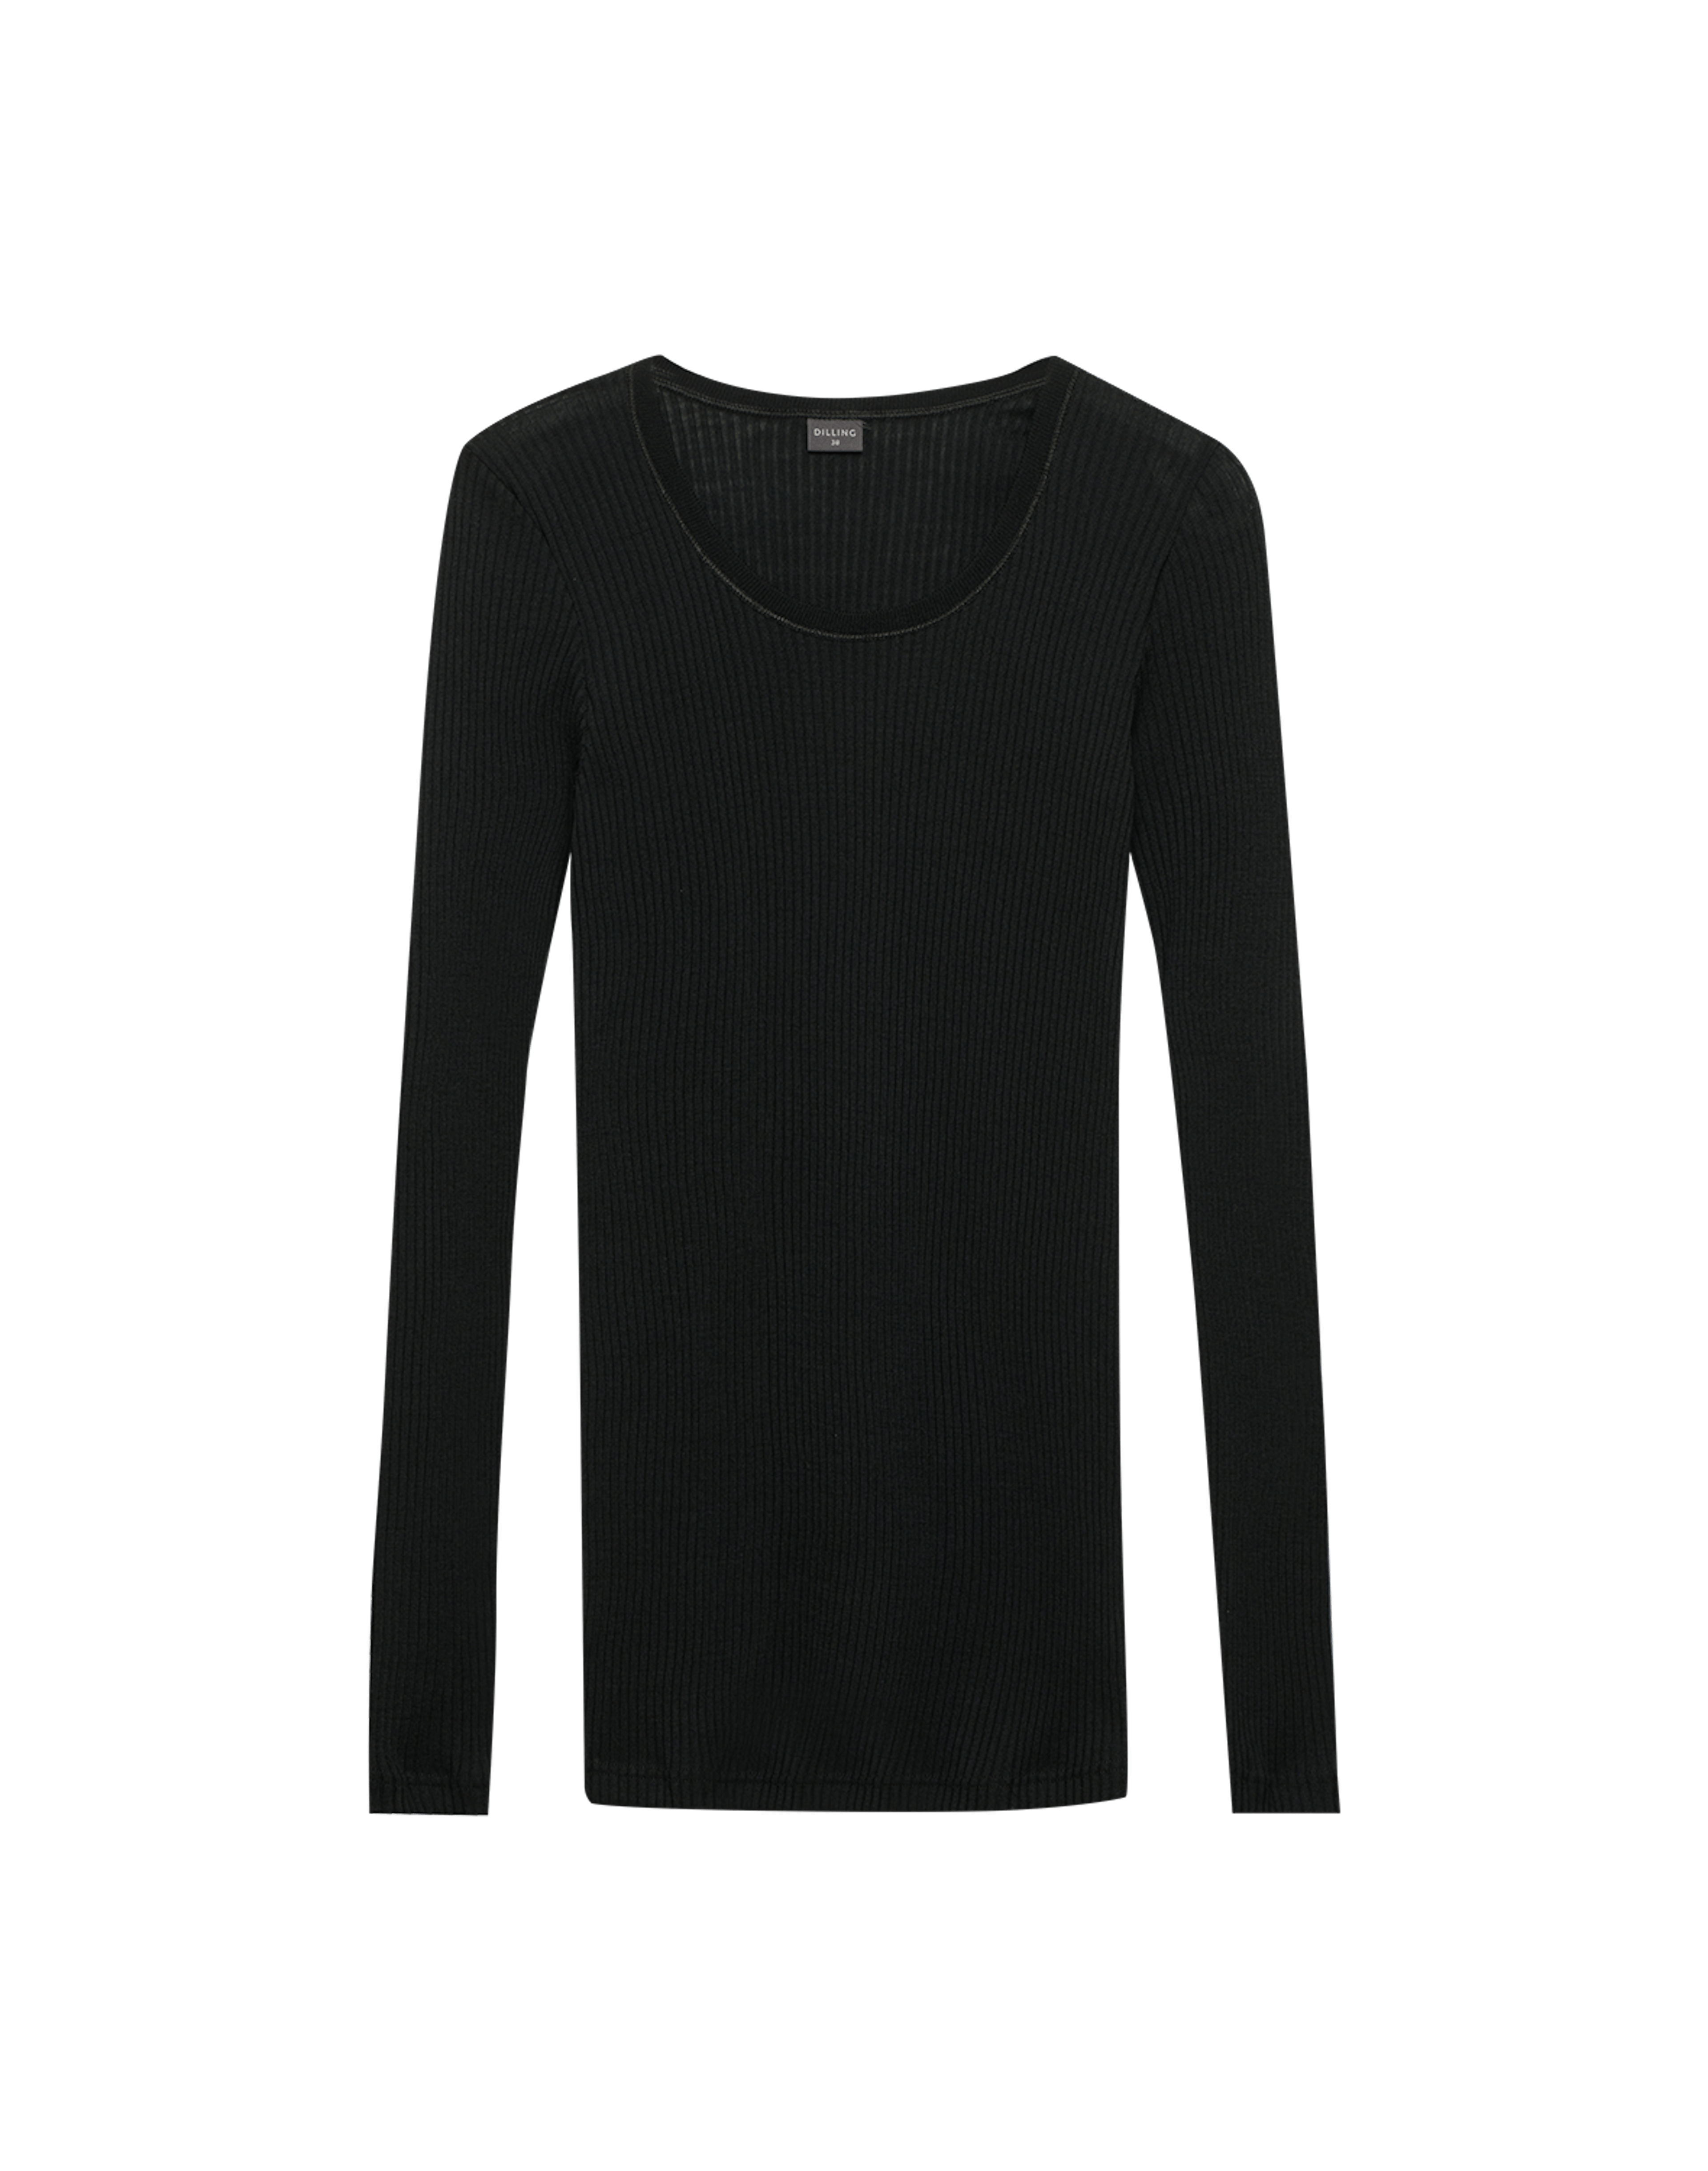 Women's merino wool long sleeve top Black